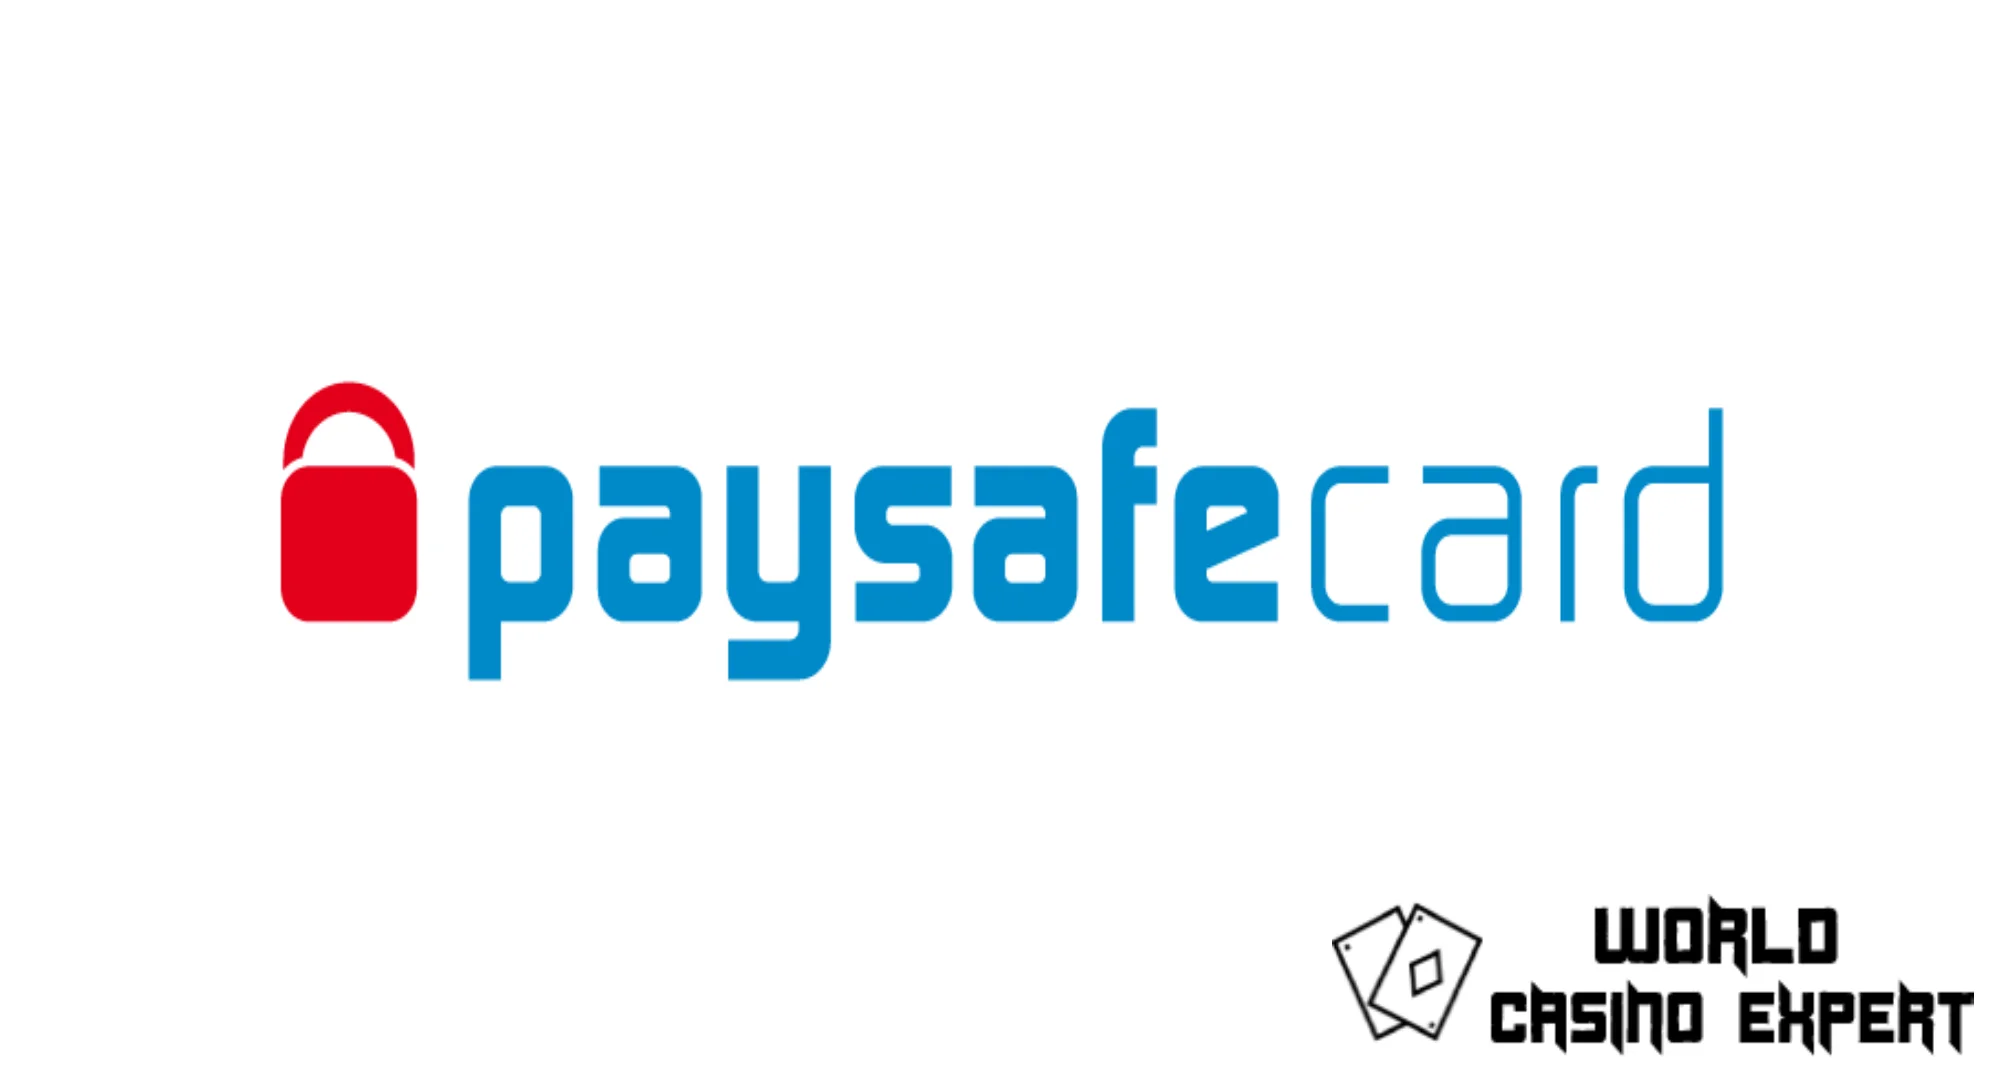 Online Casino mit Paysafecard | de.worldcasinoexpert.com